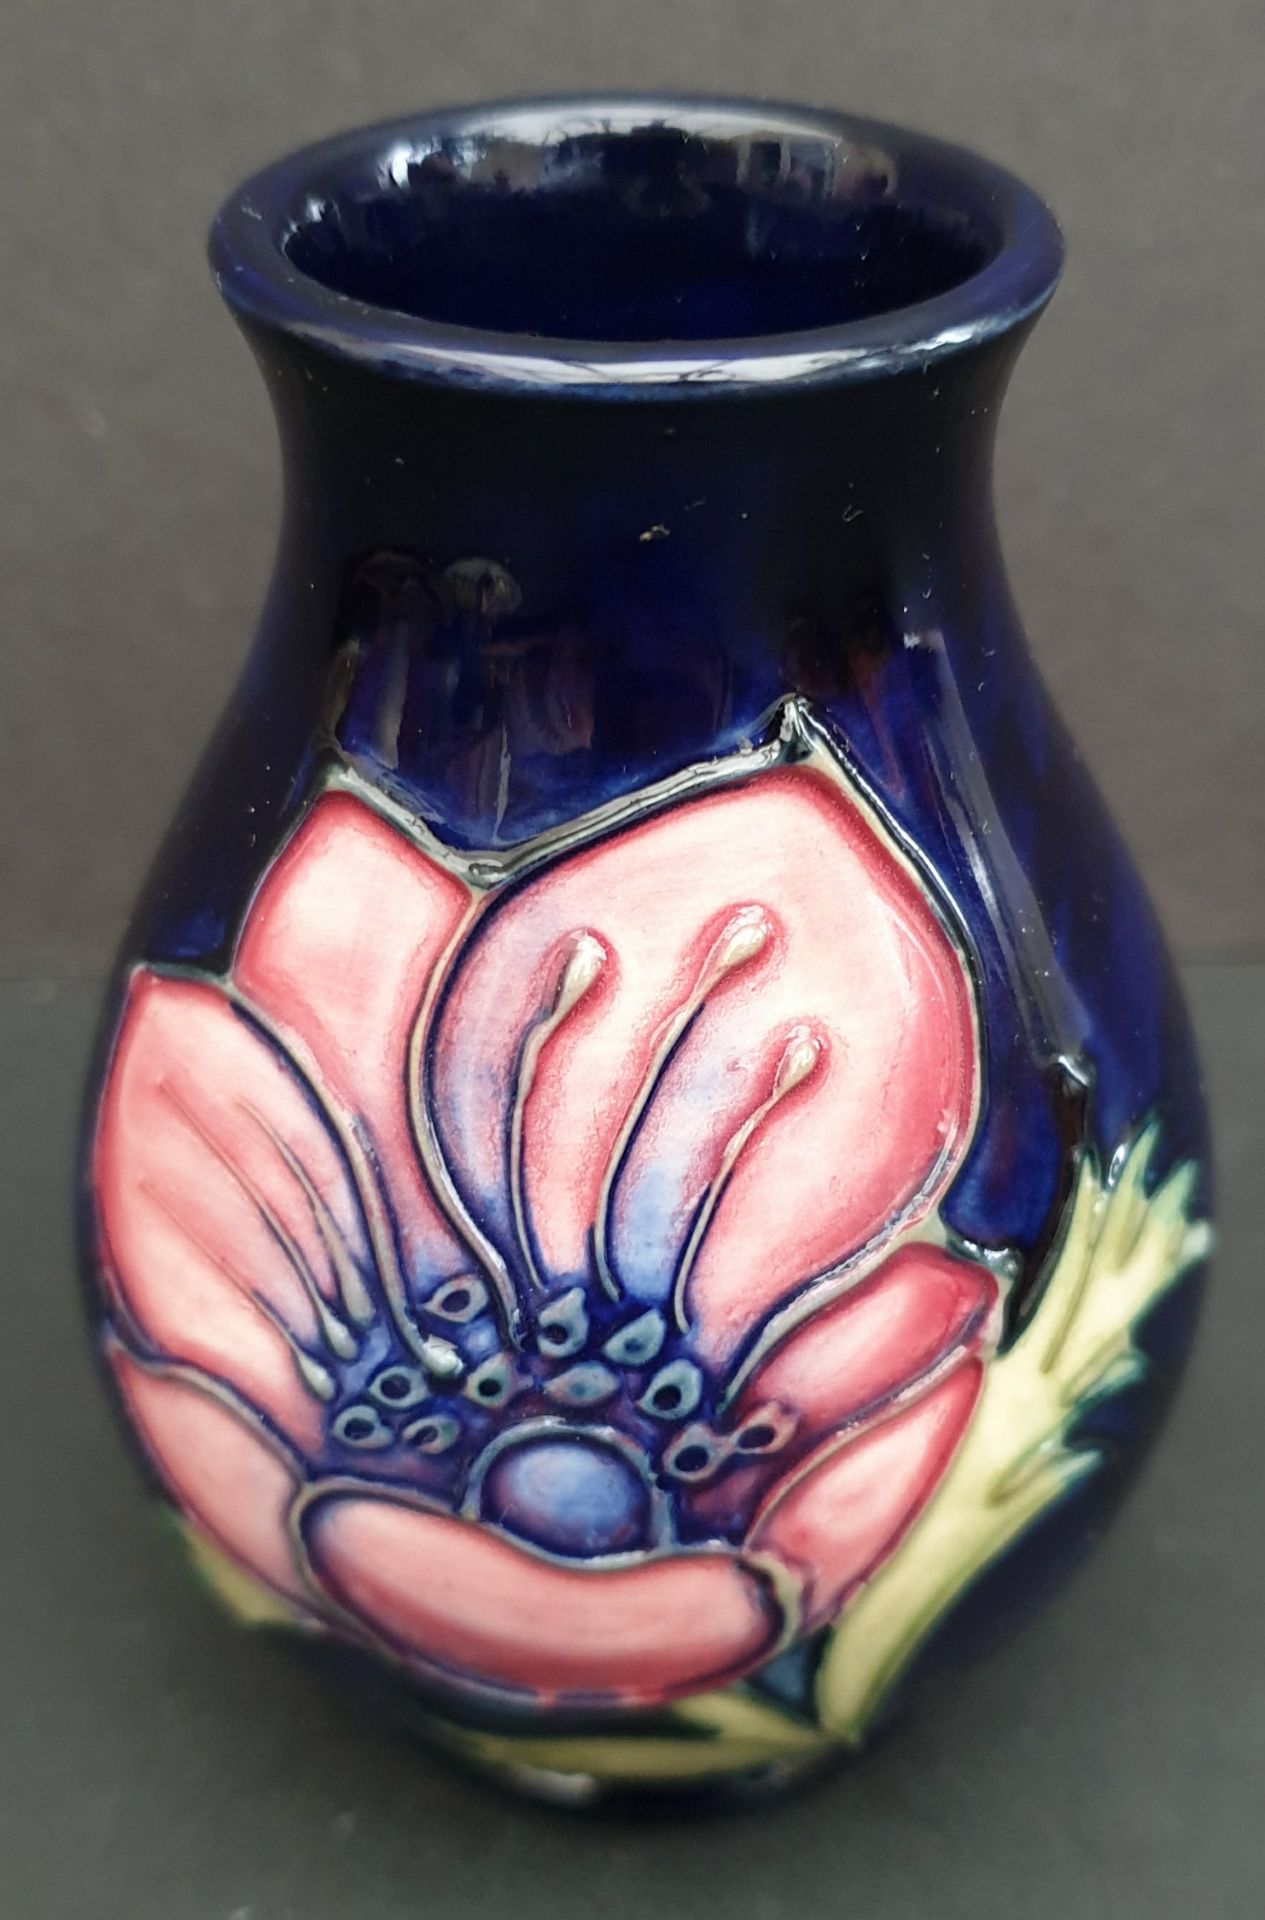 Vintage Collectable Moorcroft Vase Blue Ground 2 Flower Designs. Measures 8cm Tall. Part of a recent